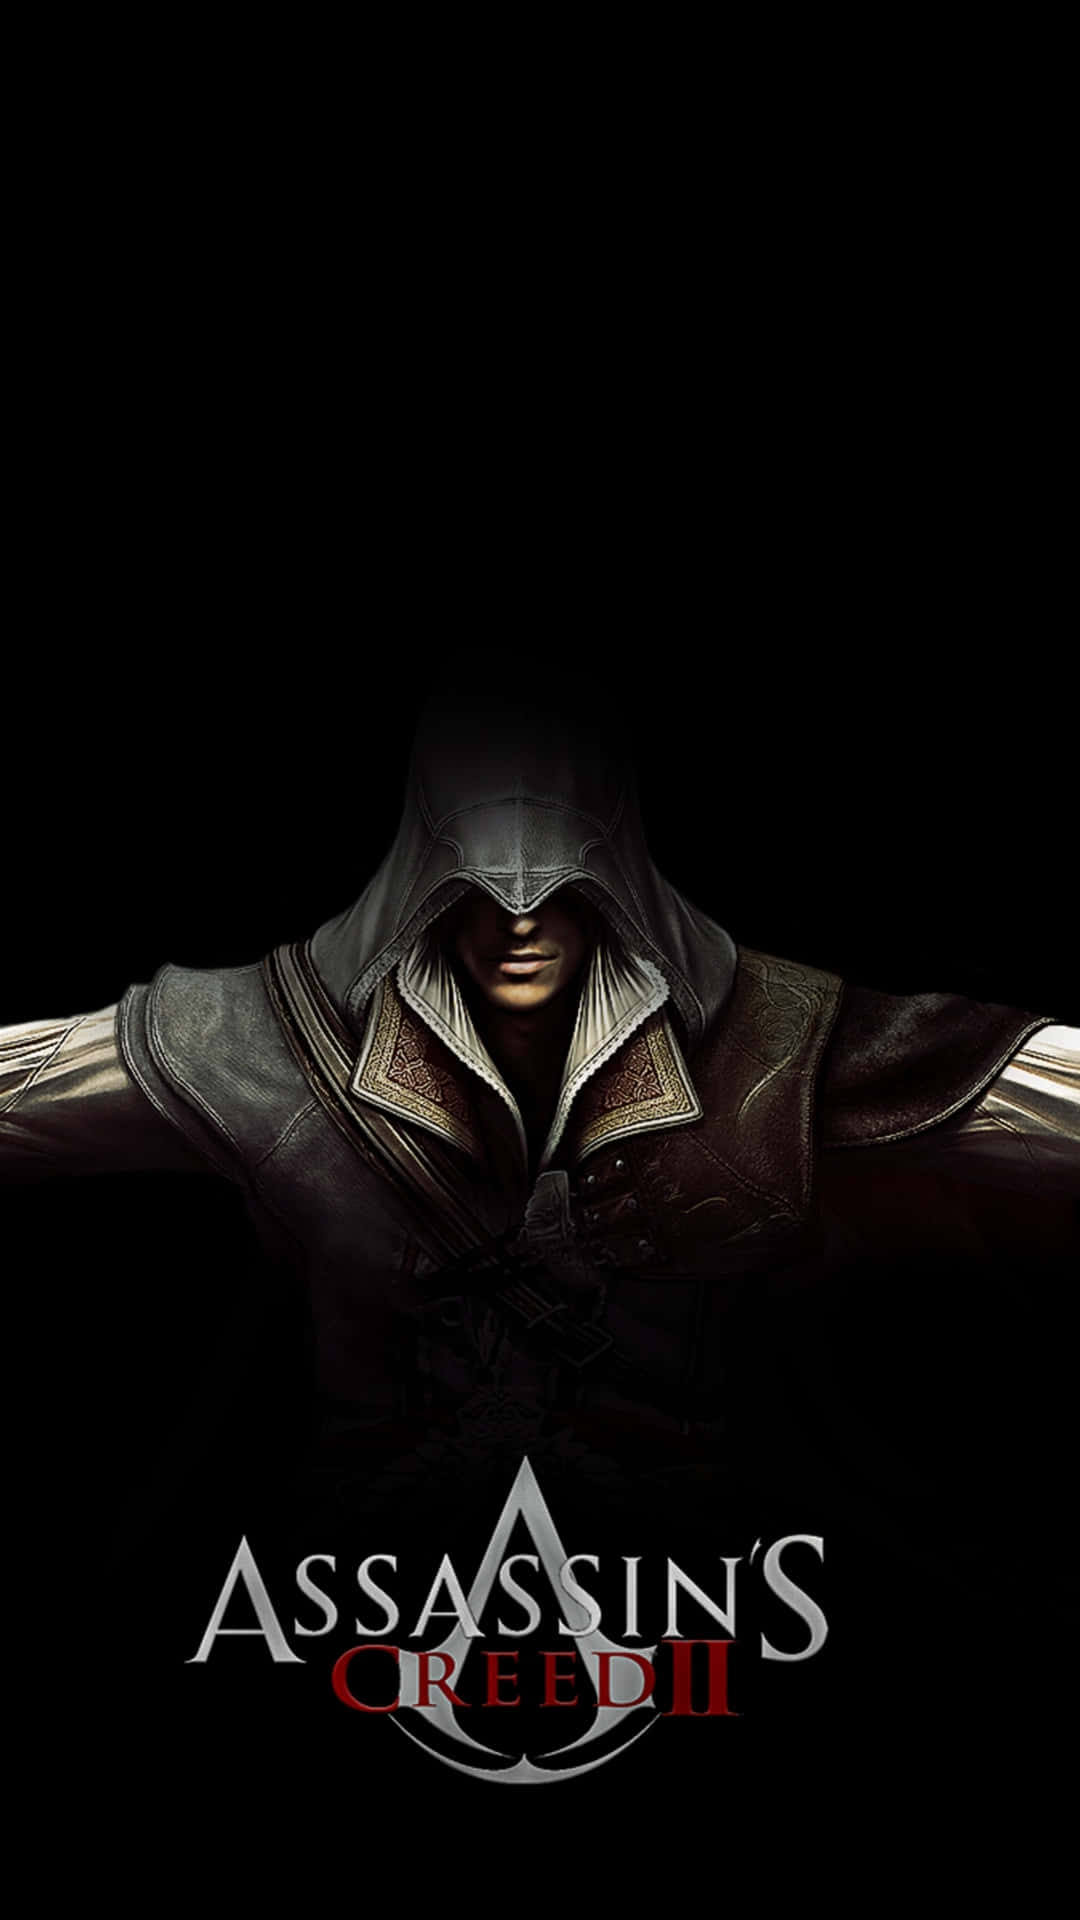 Assassin's Creed Iii Wallpaper Background